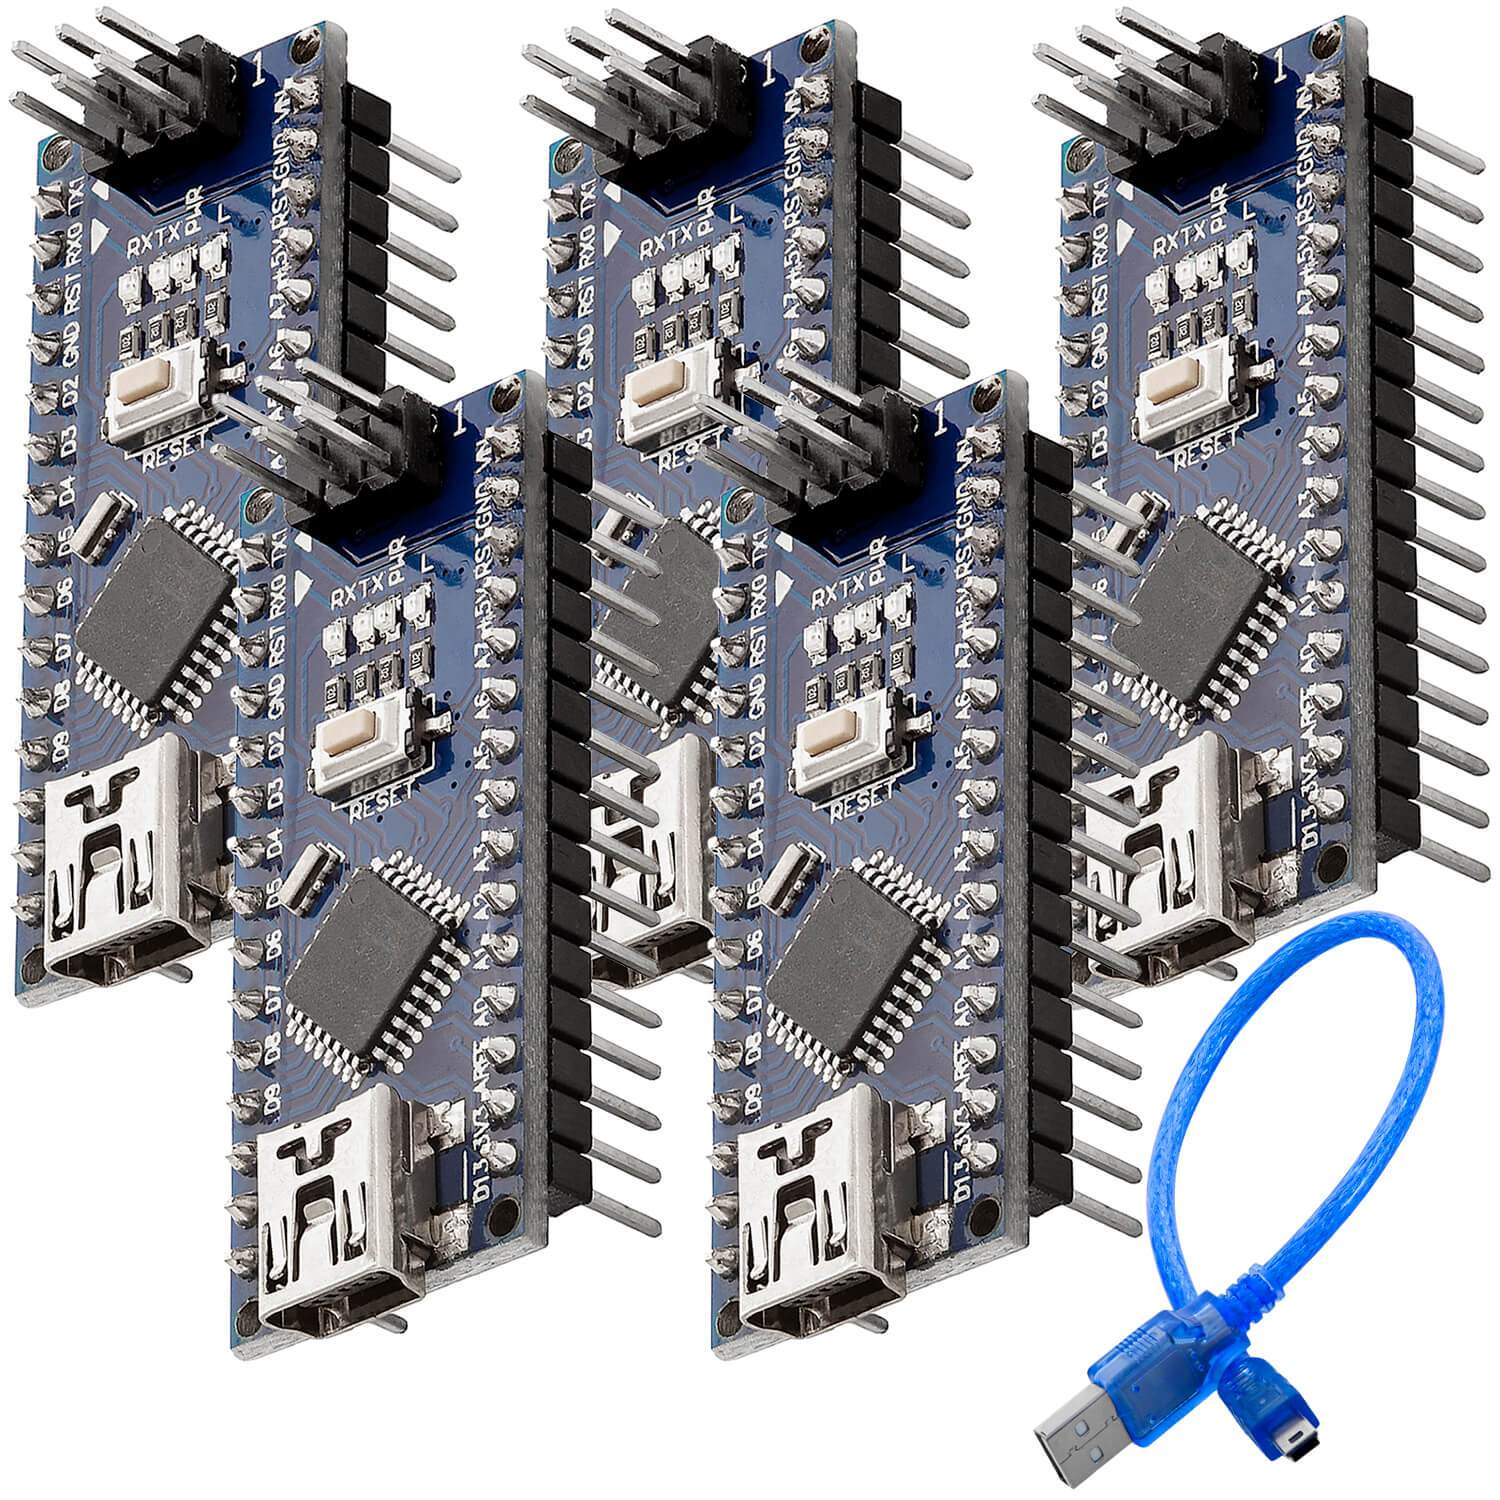 AZ-Nano V3-Board Atmega328 CH340 fertig verlötete, verbesserte Version mit USB Kabel - AZ-Delivery